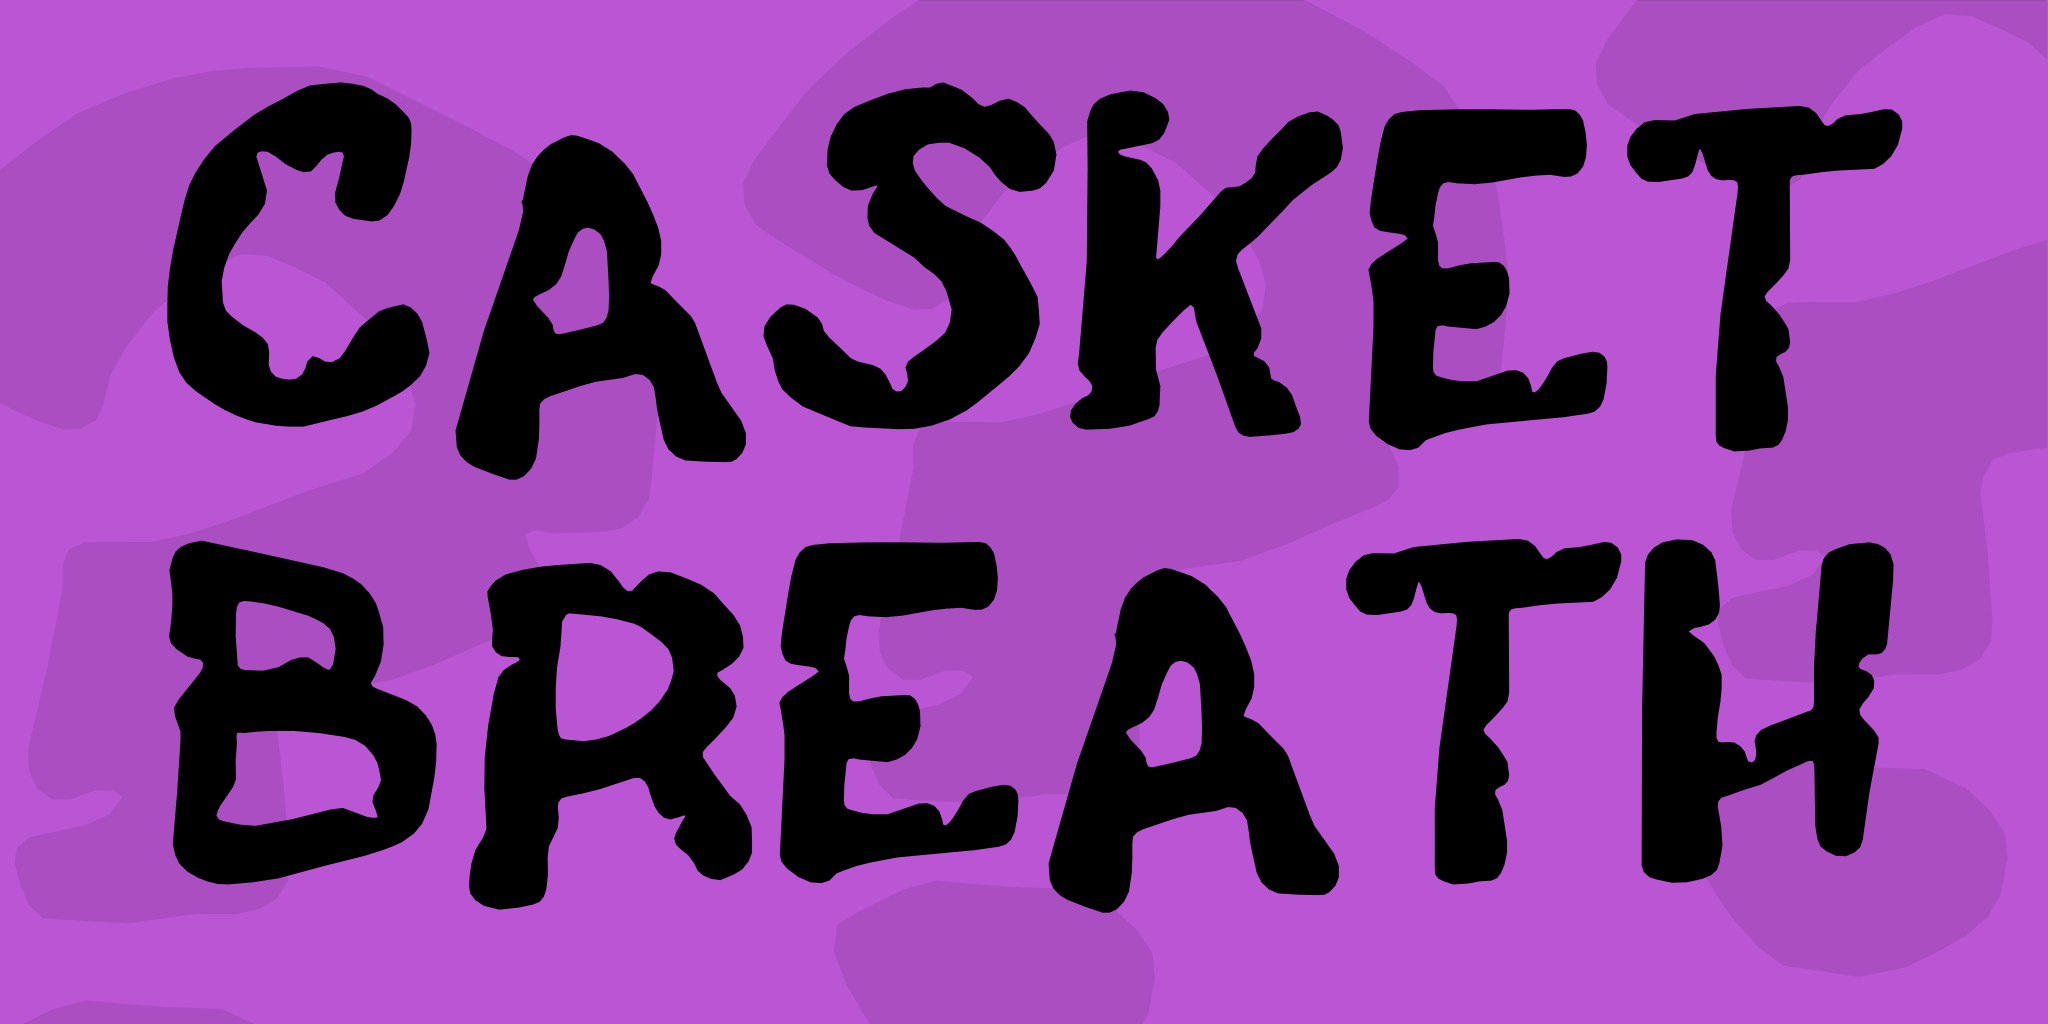 Casket Breath